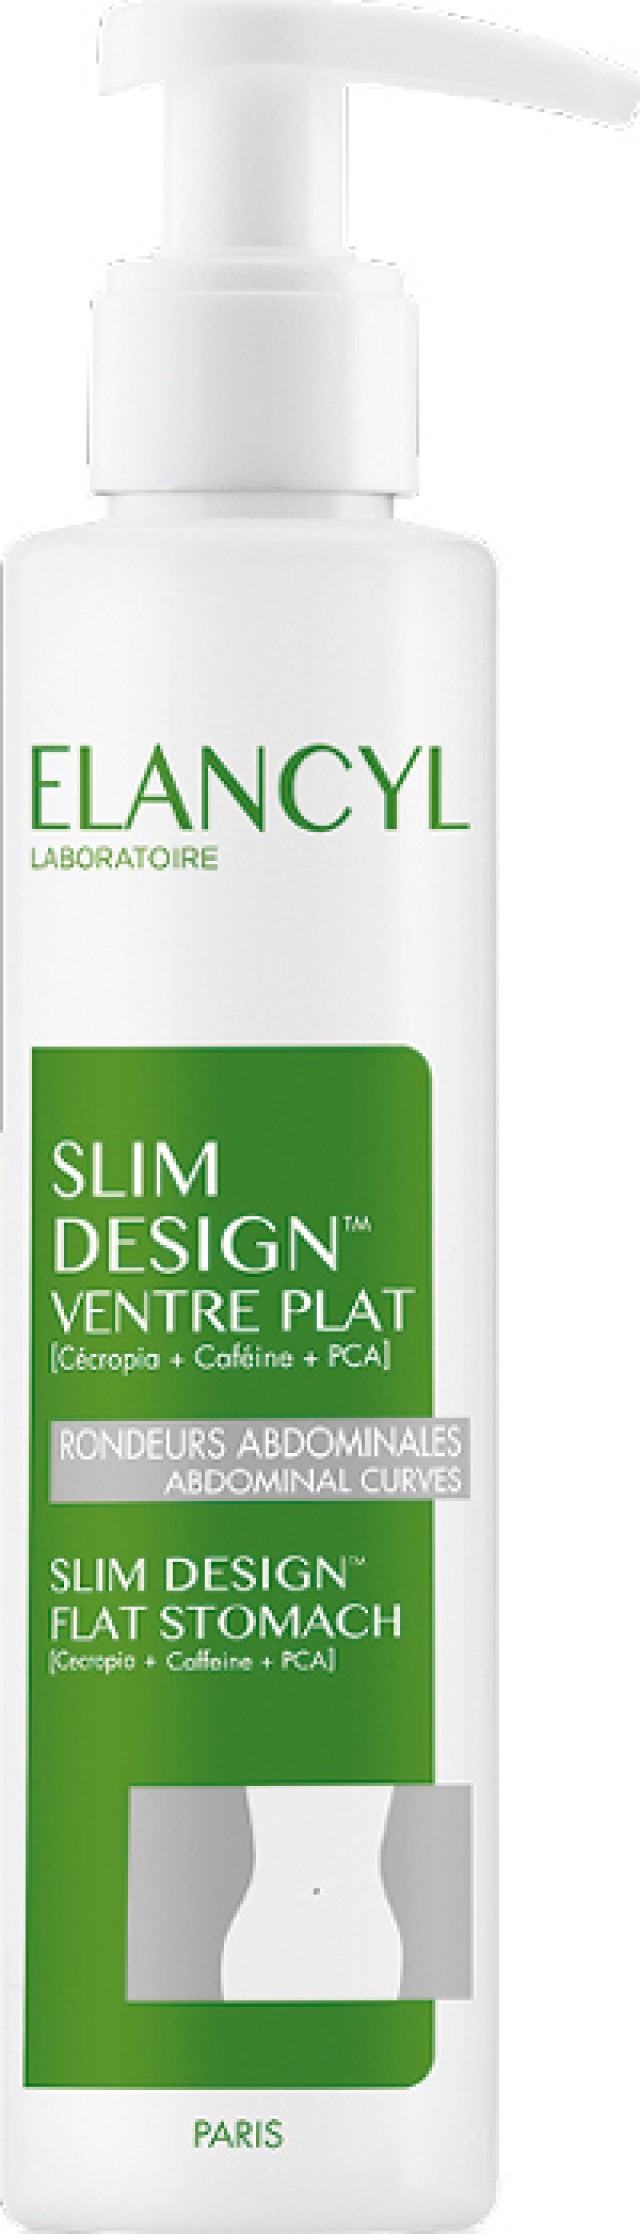 Elancyl - Slim Design Ventre Plat 150ml